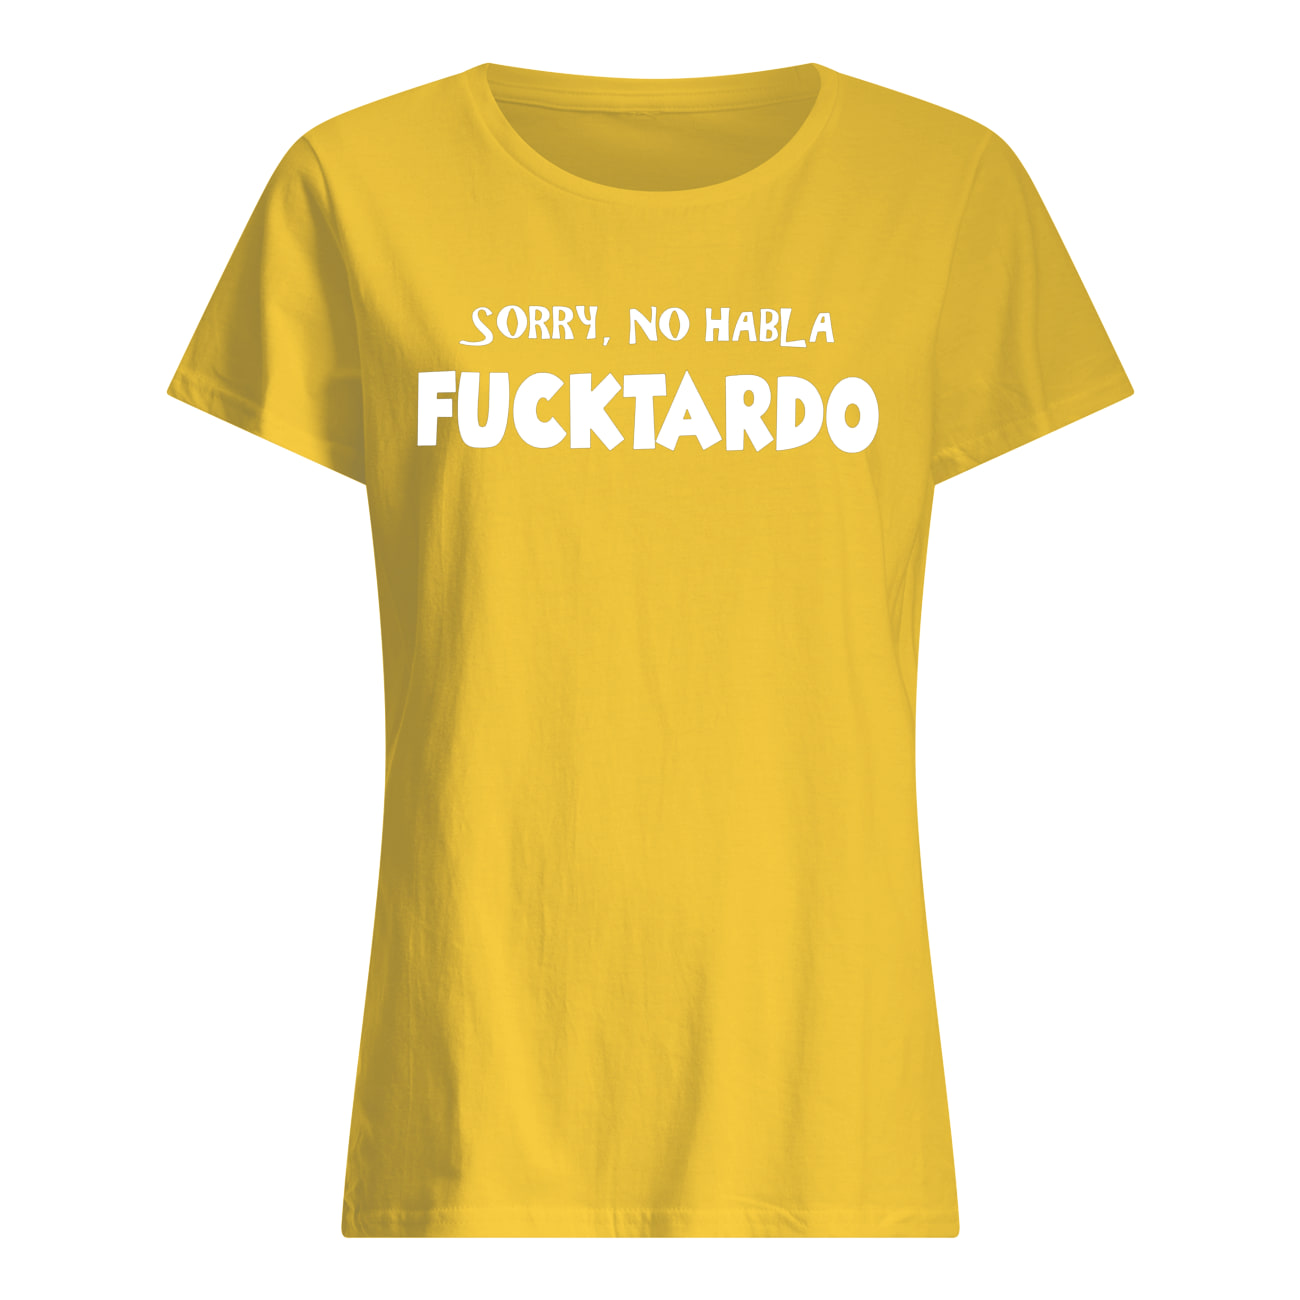 Sorry no habla fucktardo womens shirt